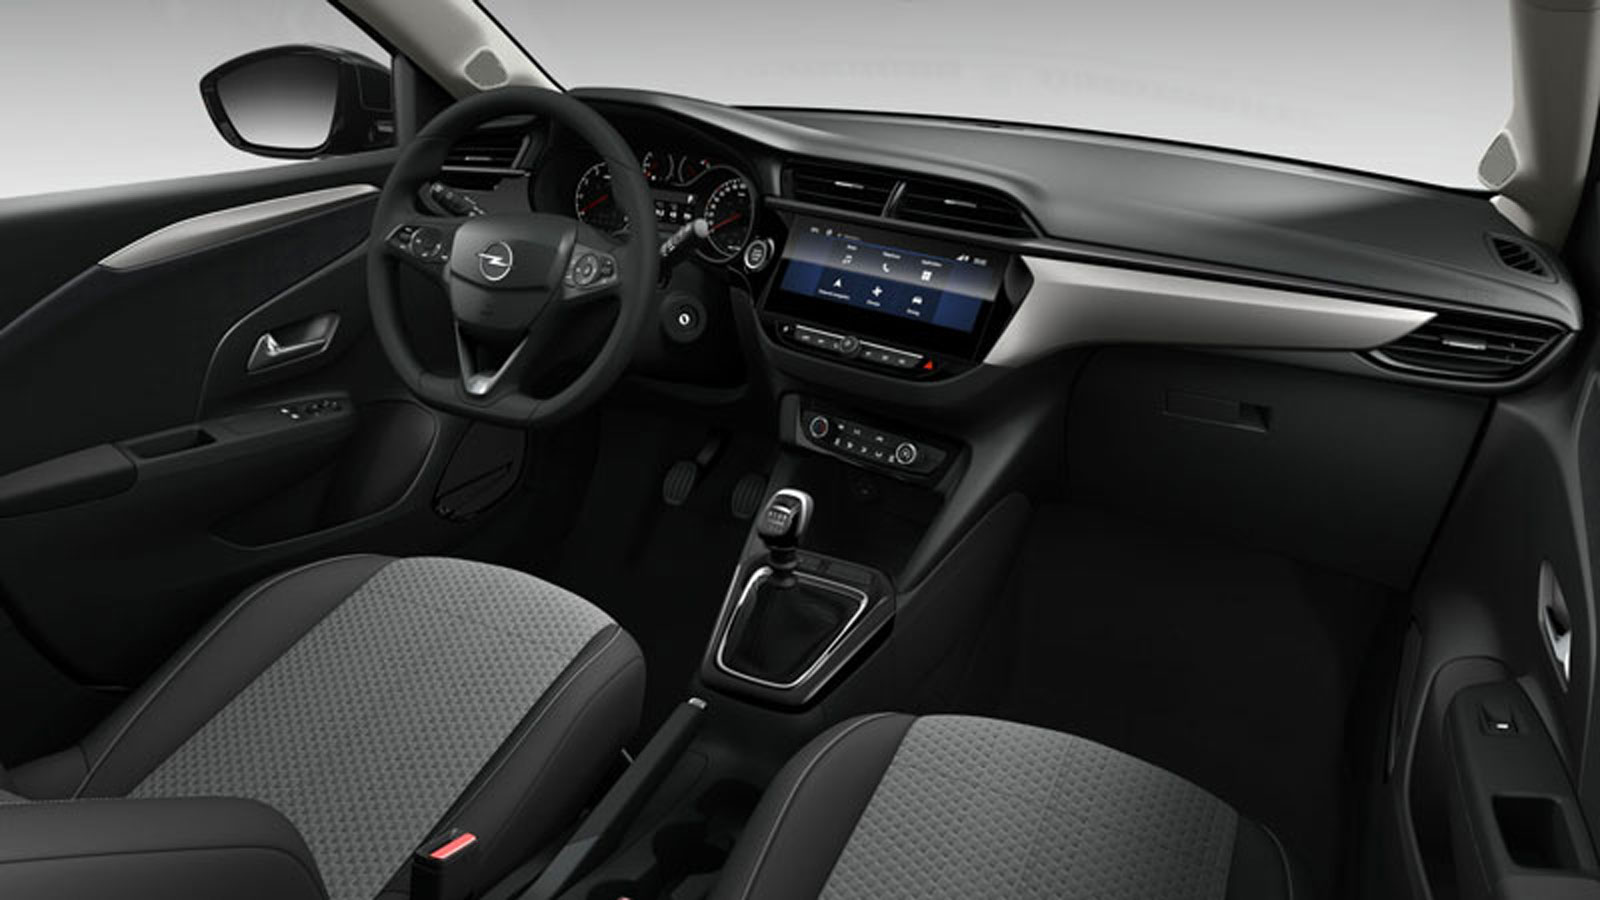 Hyundai I20 VS Opel Corsa. Ποιο ξεχωρίζει σε εξοπλισμό ασφαλείας και άνεσης;